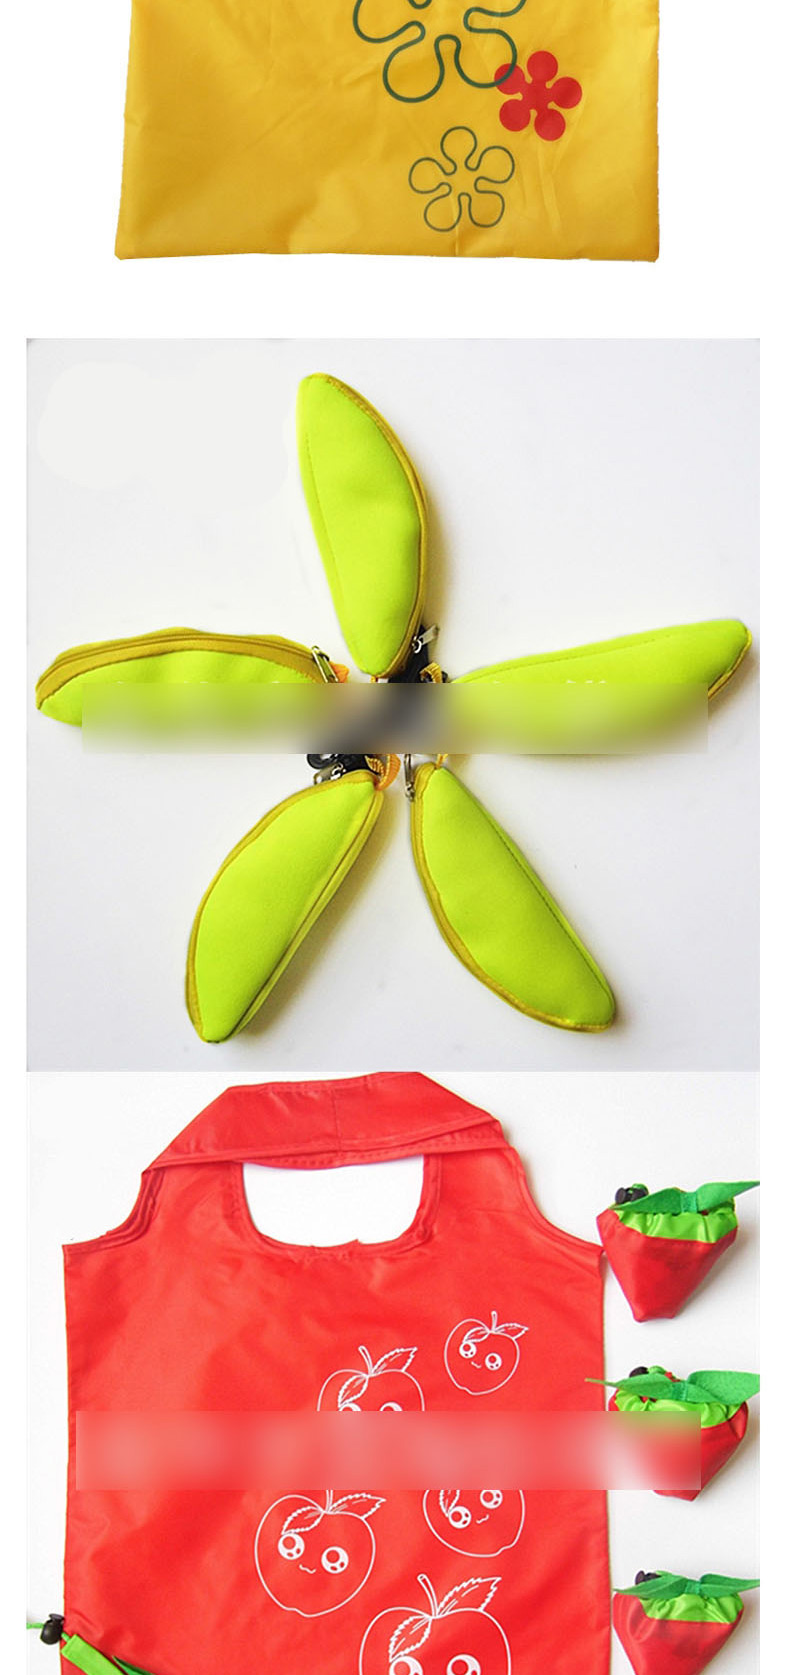 Fashion Banana Polyester Folded Fruit Green Bag Shopping Bag,Handbags